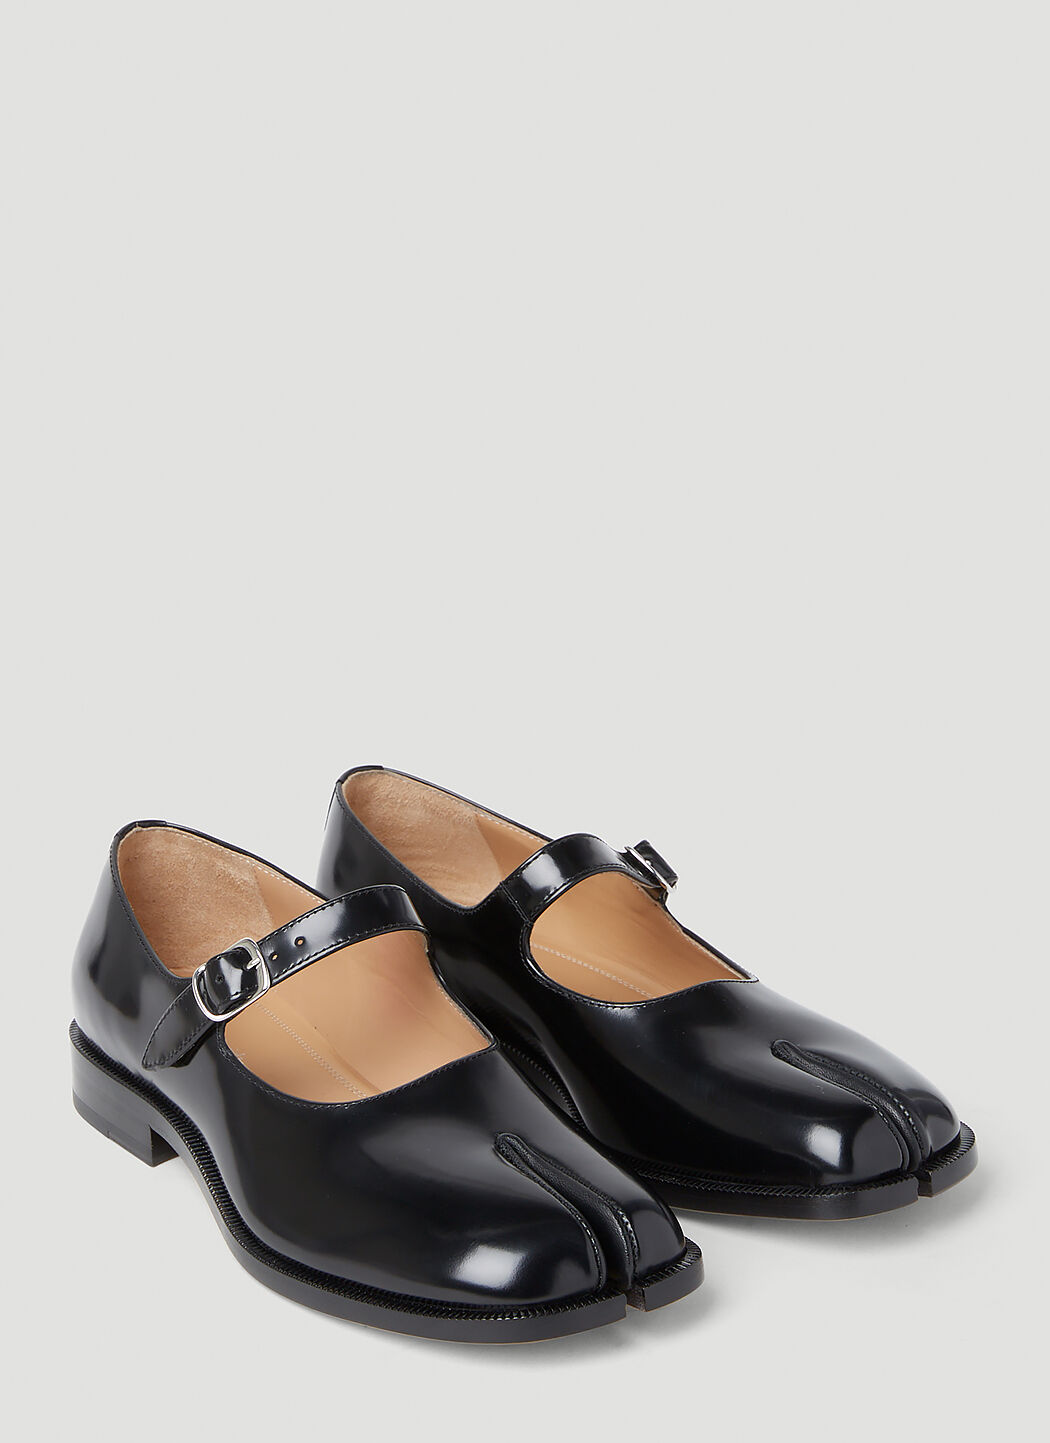 Maison Margiela Women's Tabi Mary Jane Shoes in Black | LN-CC®